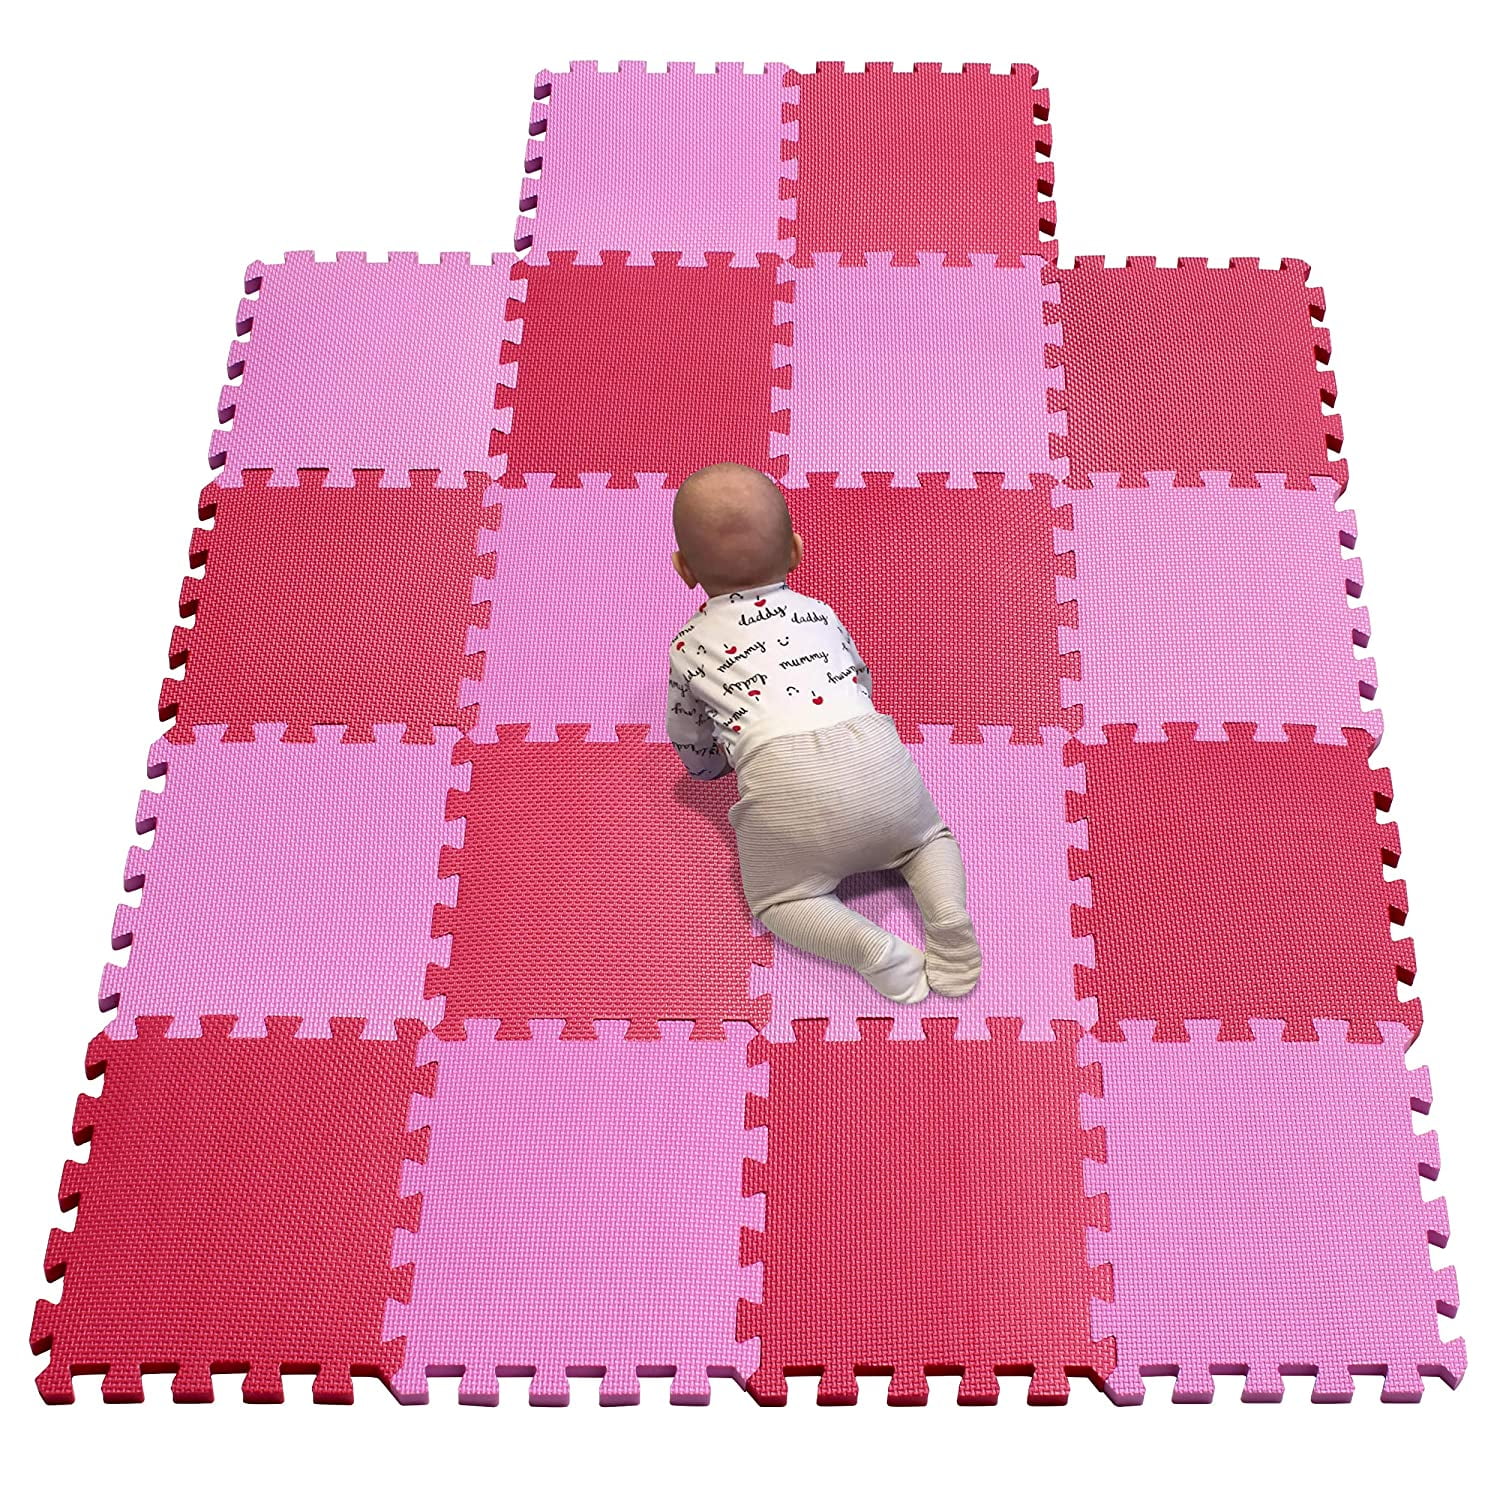 Details about   Large EVA Soft Foam Mat Jigsaw Gym Interlocking Floor Tiles Kids Play Mats White 